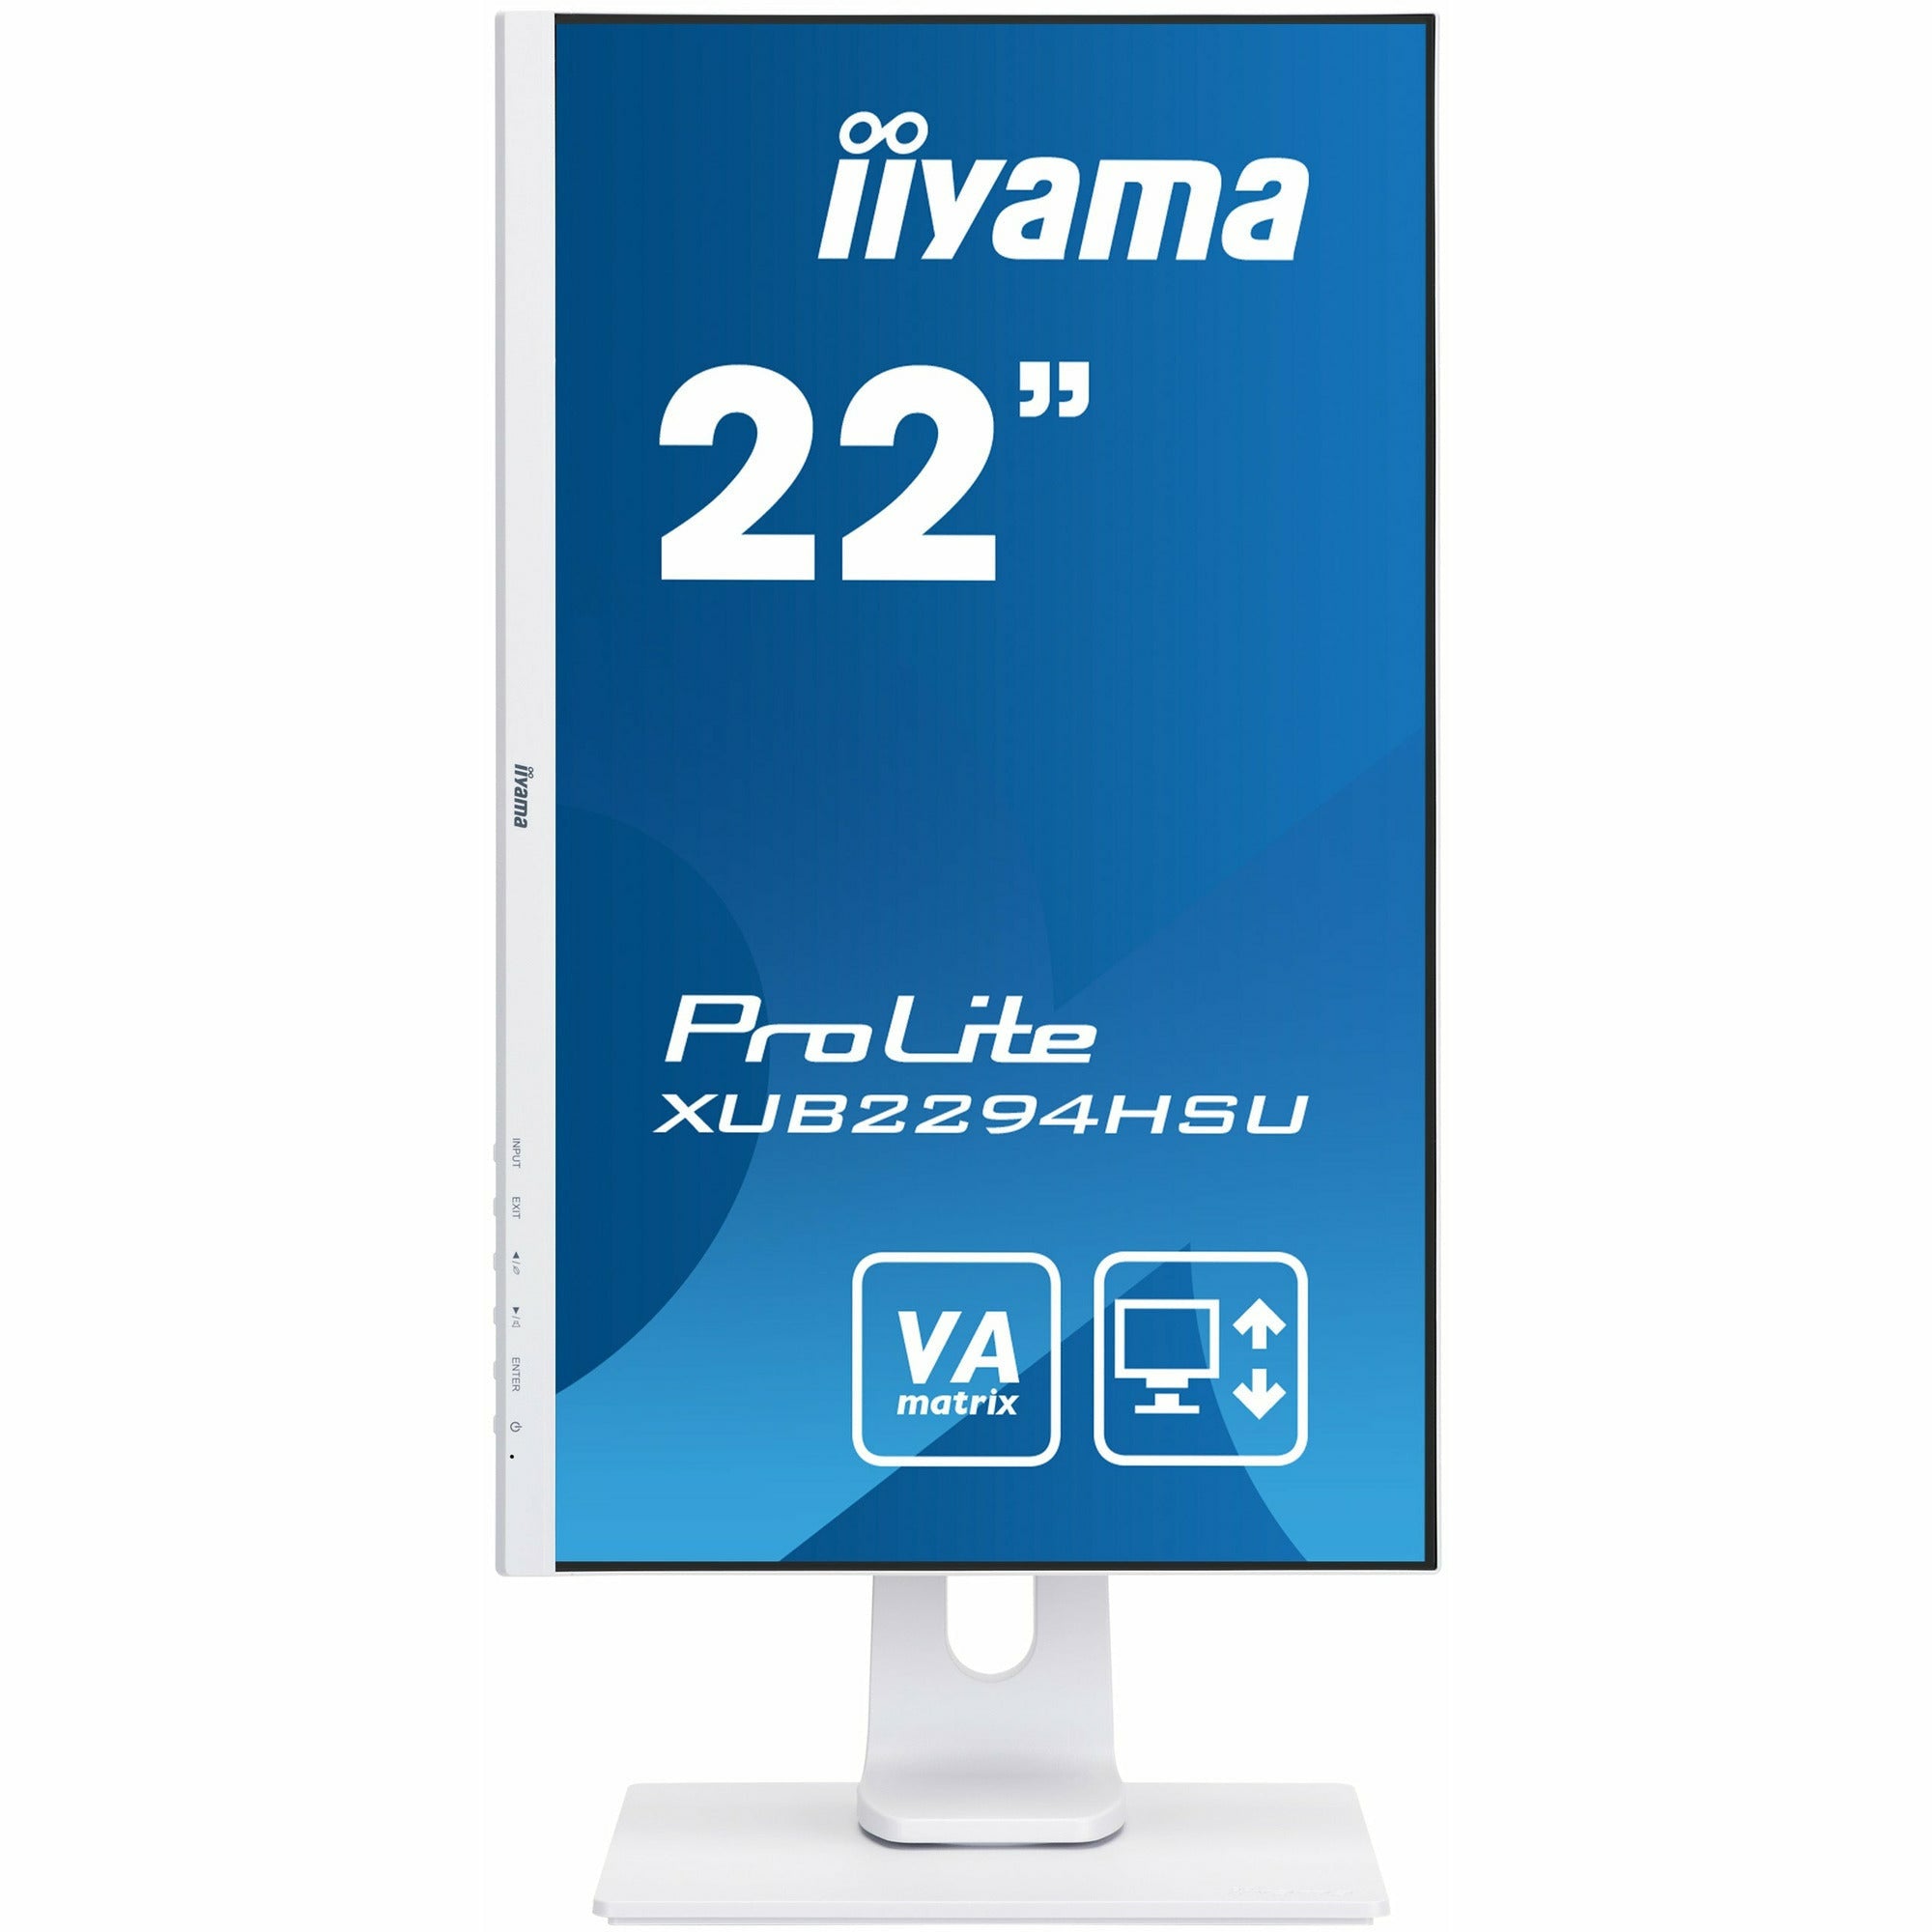 iiyama ProLite XUB2294HSU-W1 22" LCD HD Monitor in White